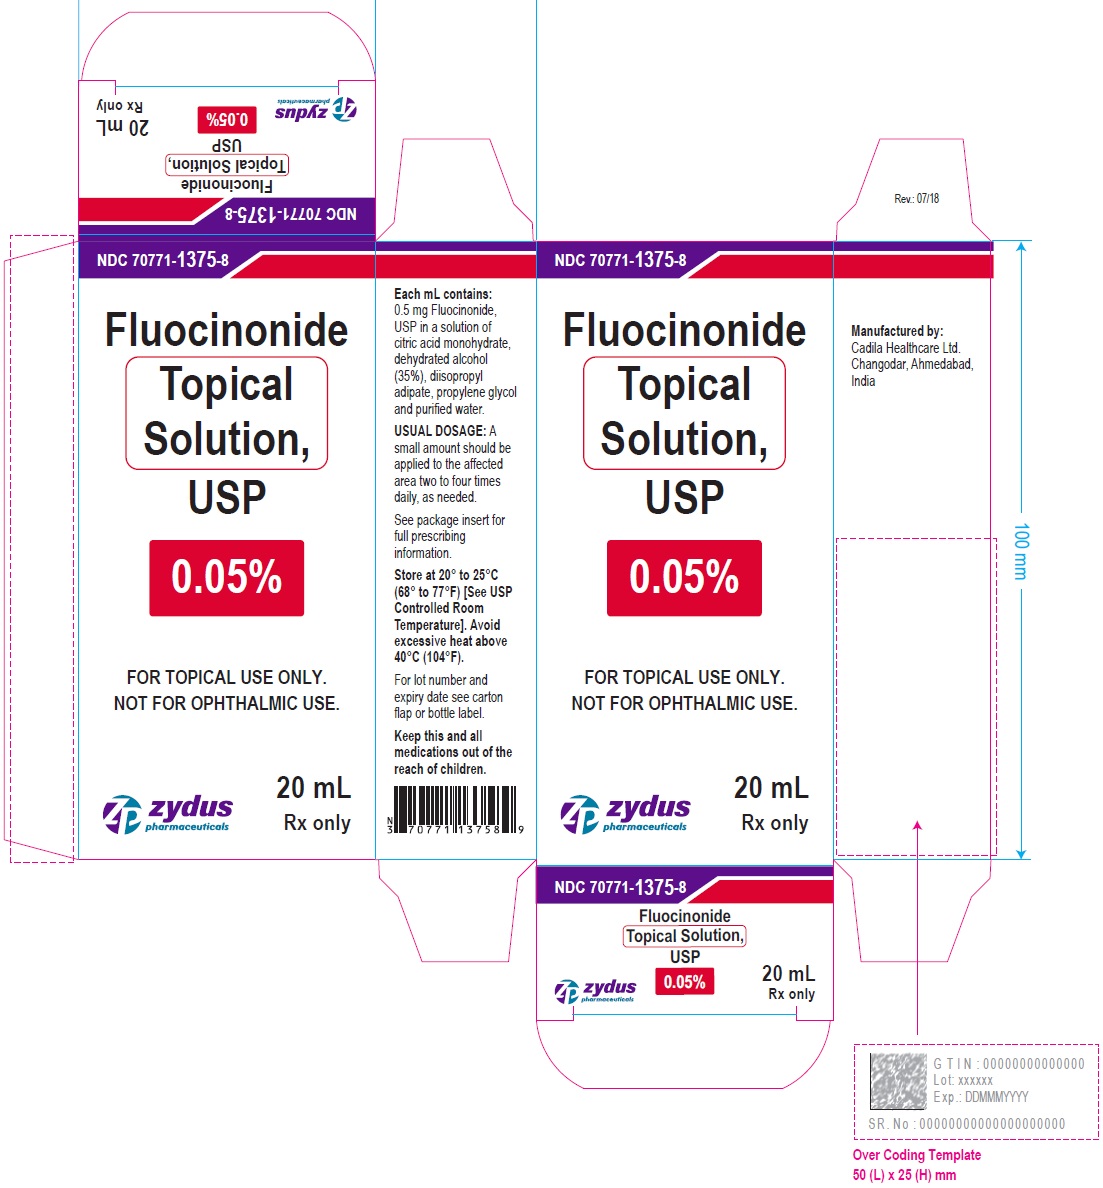 Fluocinonide topical solution USP, 0.05%